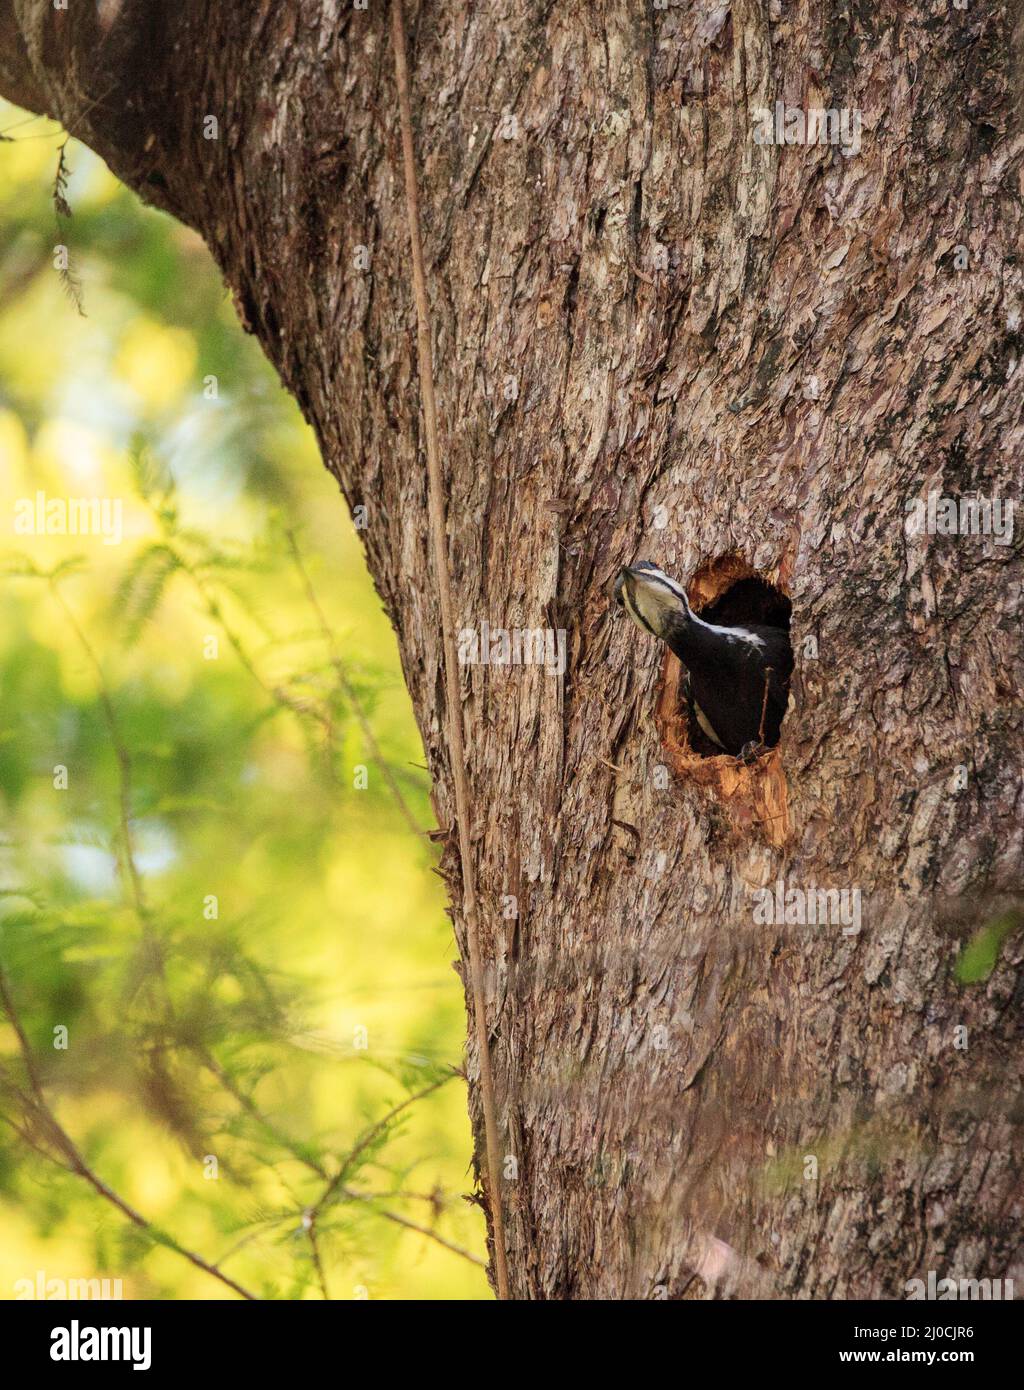 El pájaro carpintero pilotado Dryocopus pileatus se aparea de su agujero de nido Foto de stock